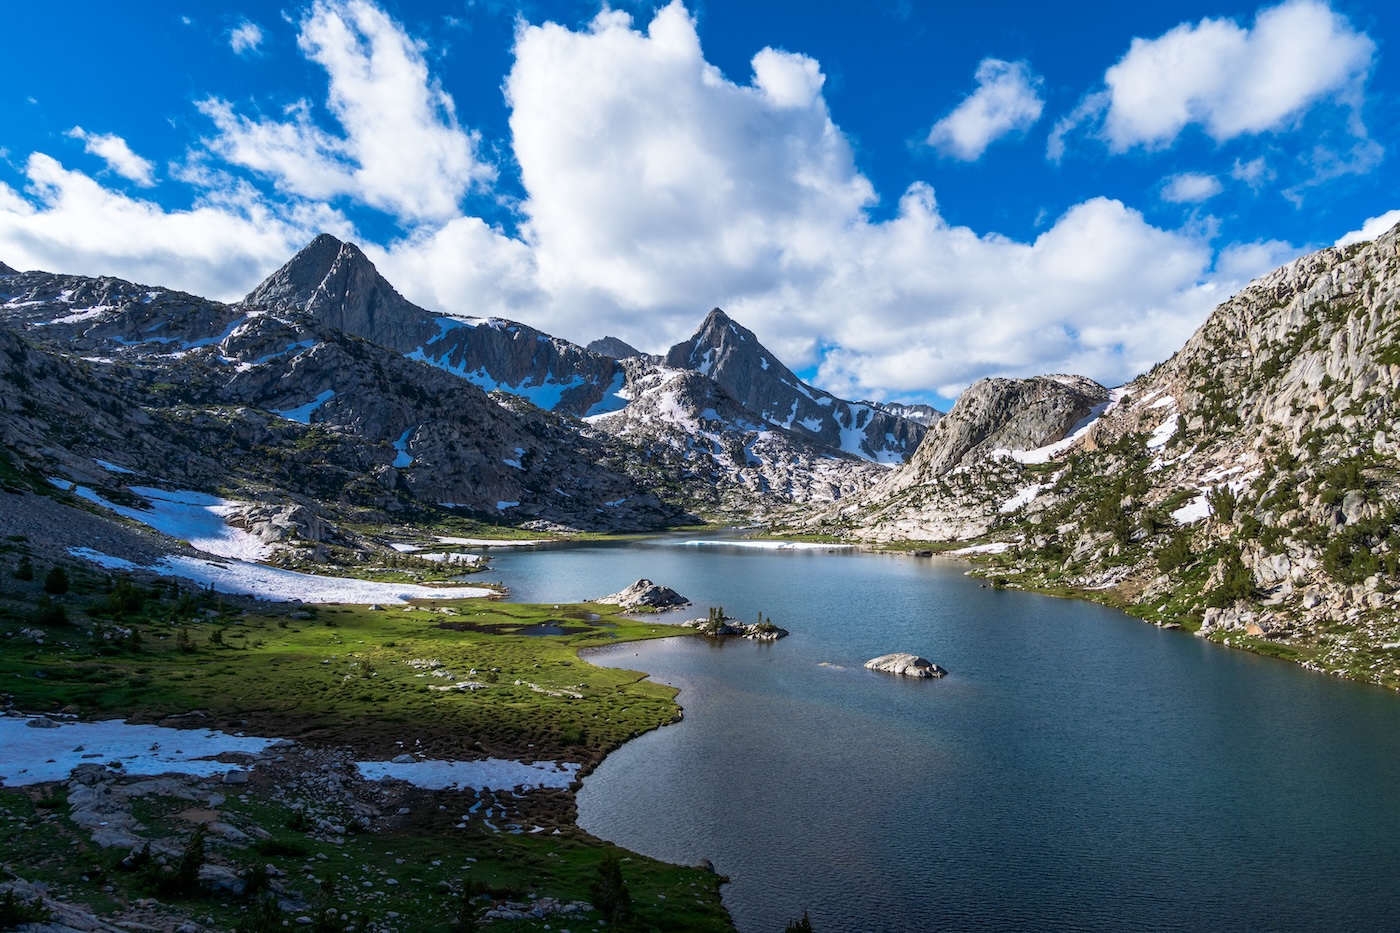 Spectacle Lake in Washington's Alpine Lakes Wilderness. Photo by Brock Dallman